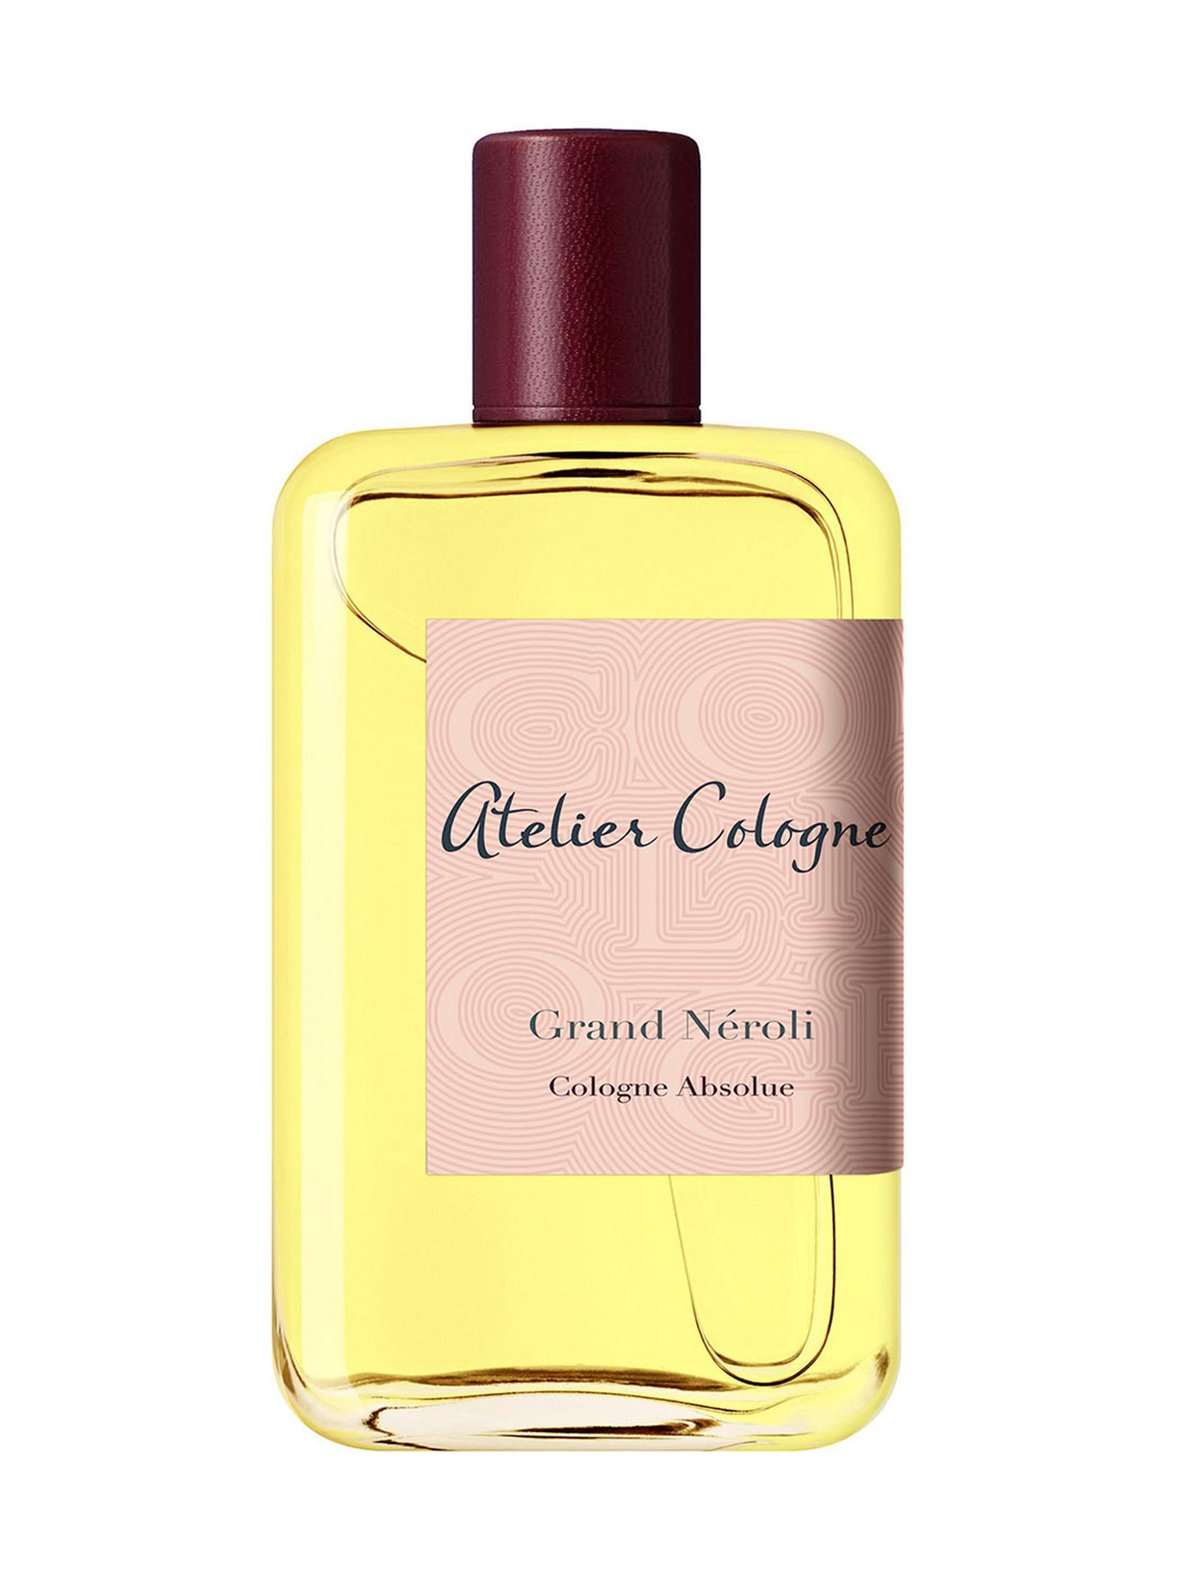 Grand Néroli Cologne Absolue -tuoksu, Atelier Cologne